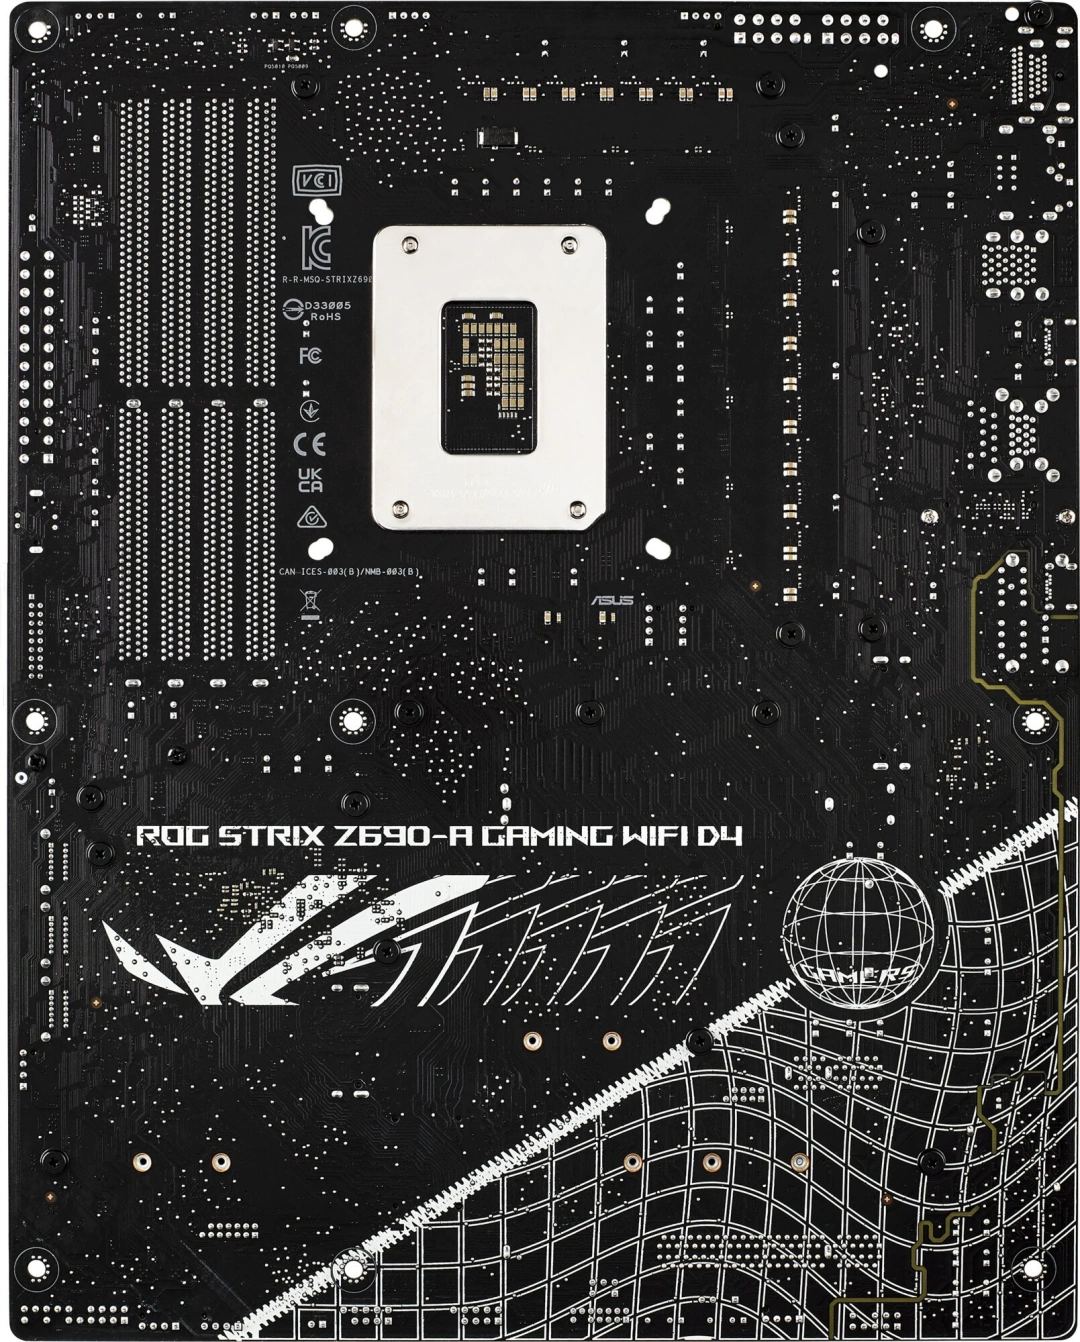 ASUS ROG STRIX Z690-A GAMING WIFI D4